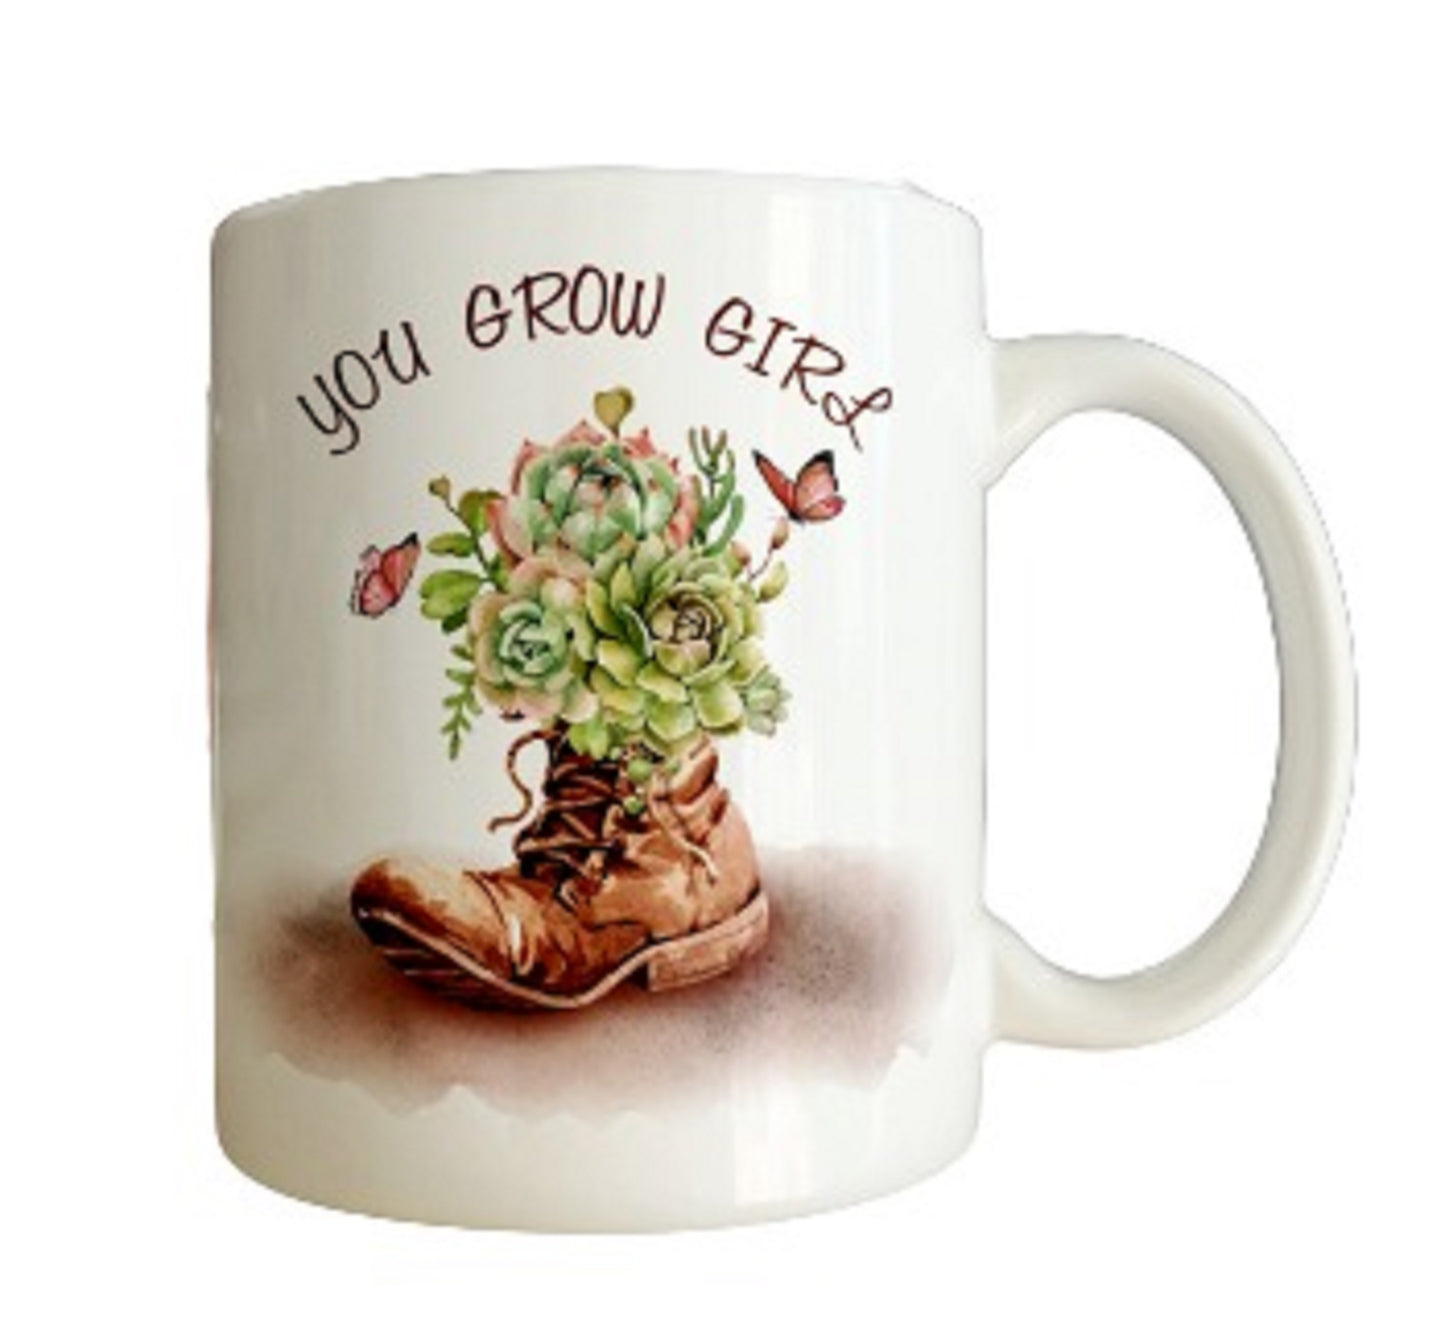  You Grow Girl Floral Gardening Mug by Free Spirit Accessories sold by Free Spirit Accessories